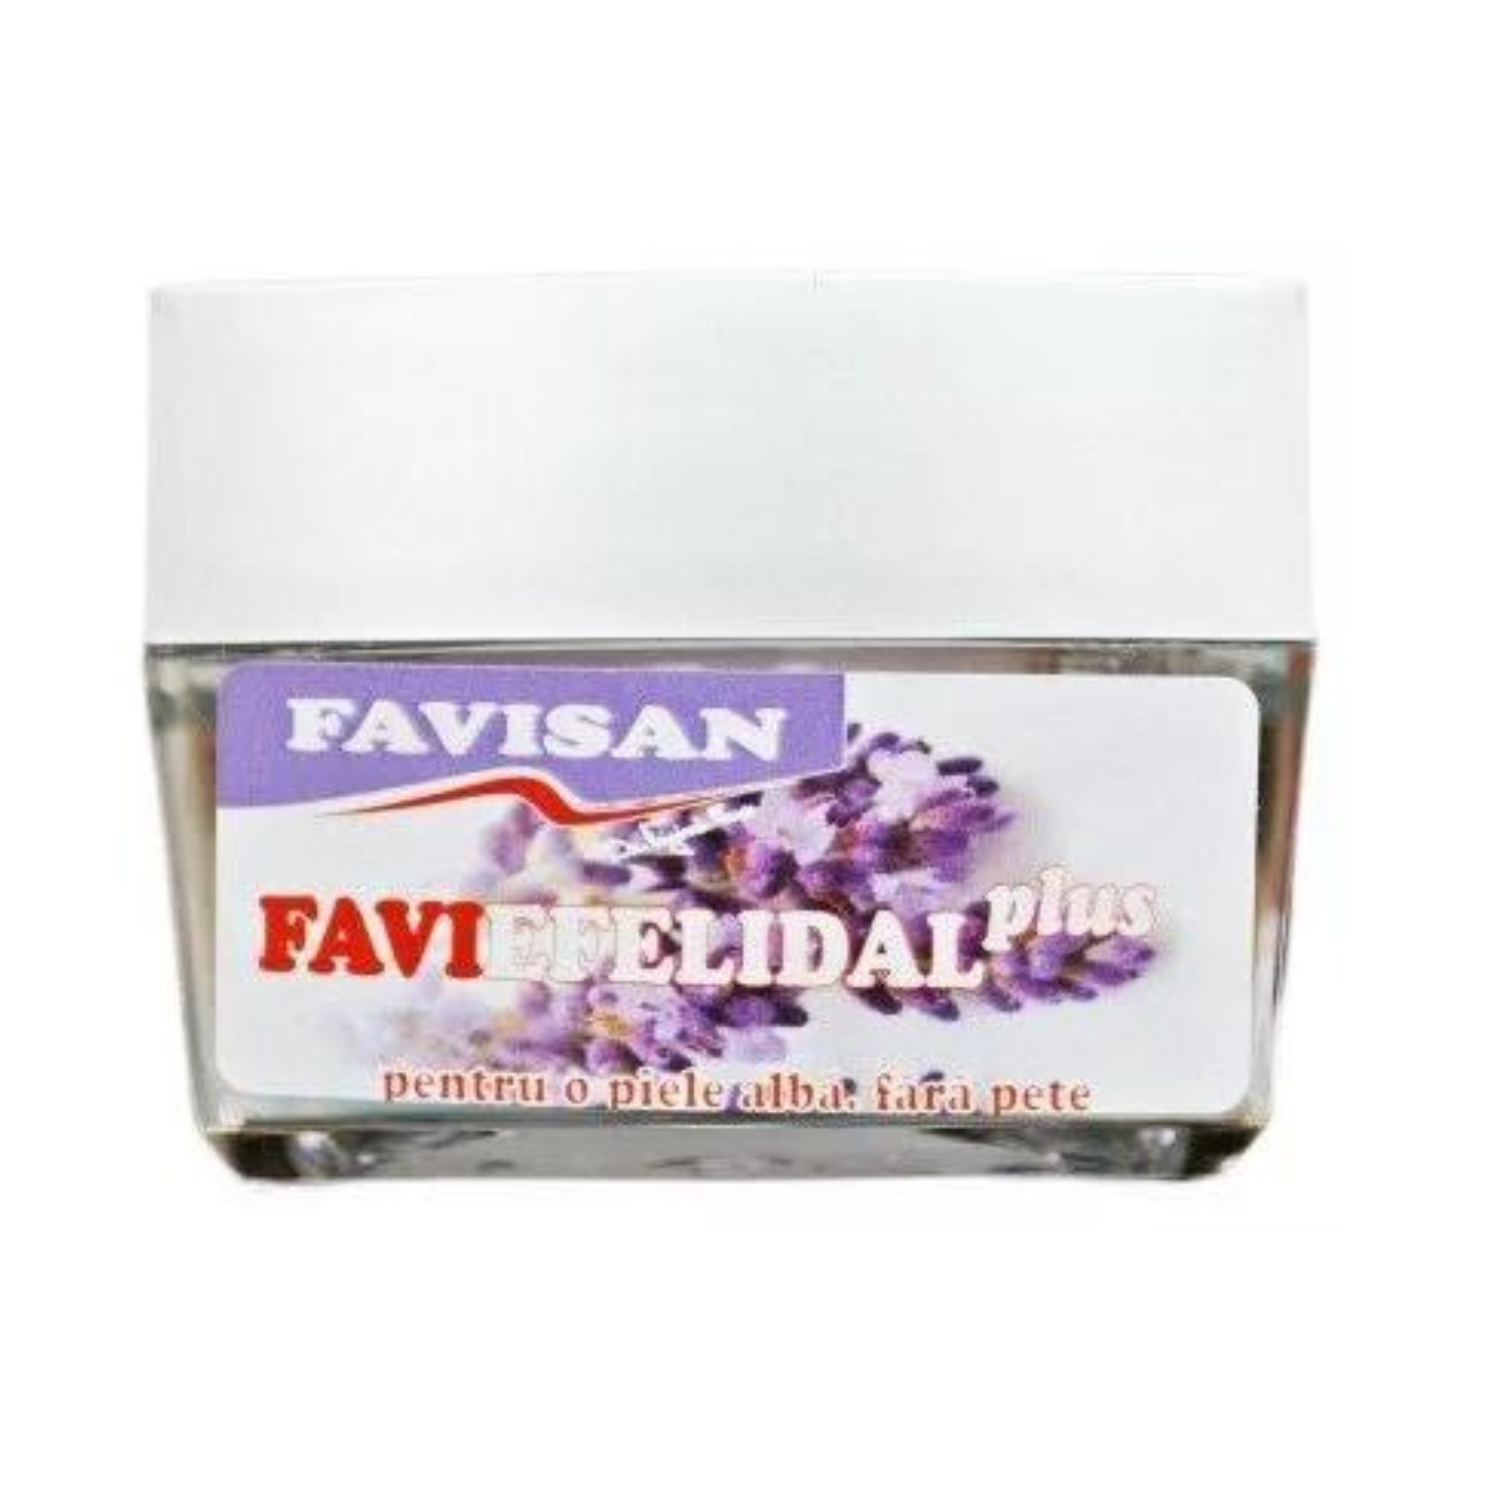 Crema pentru piele alba fara pete Efelidal Plus, 40 ml, Favisan